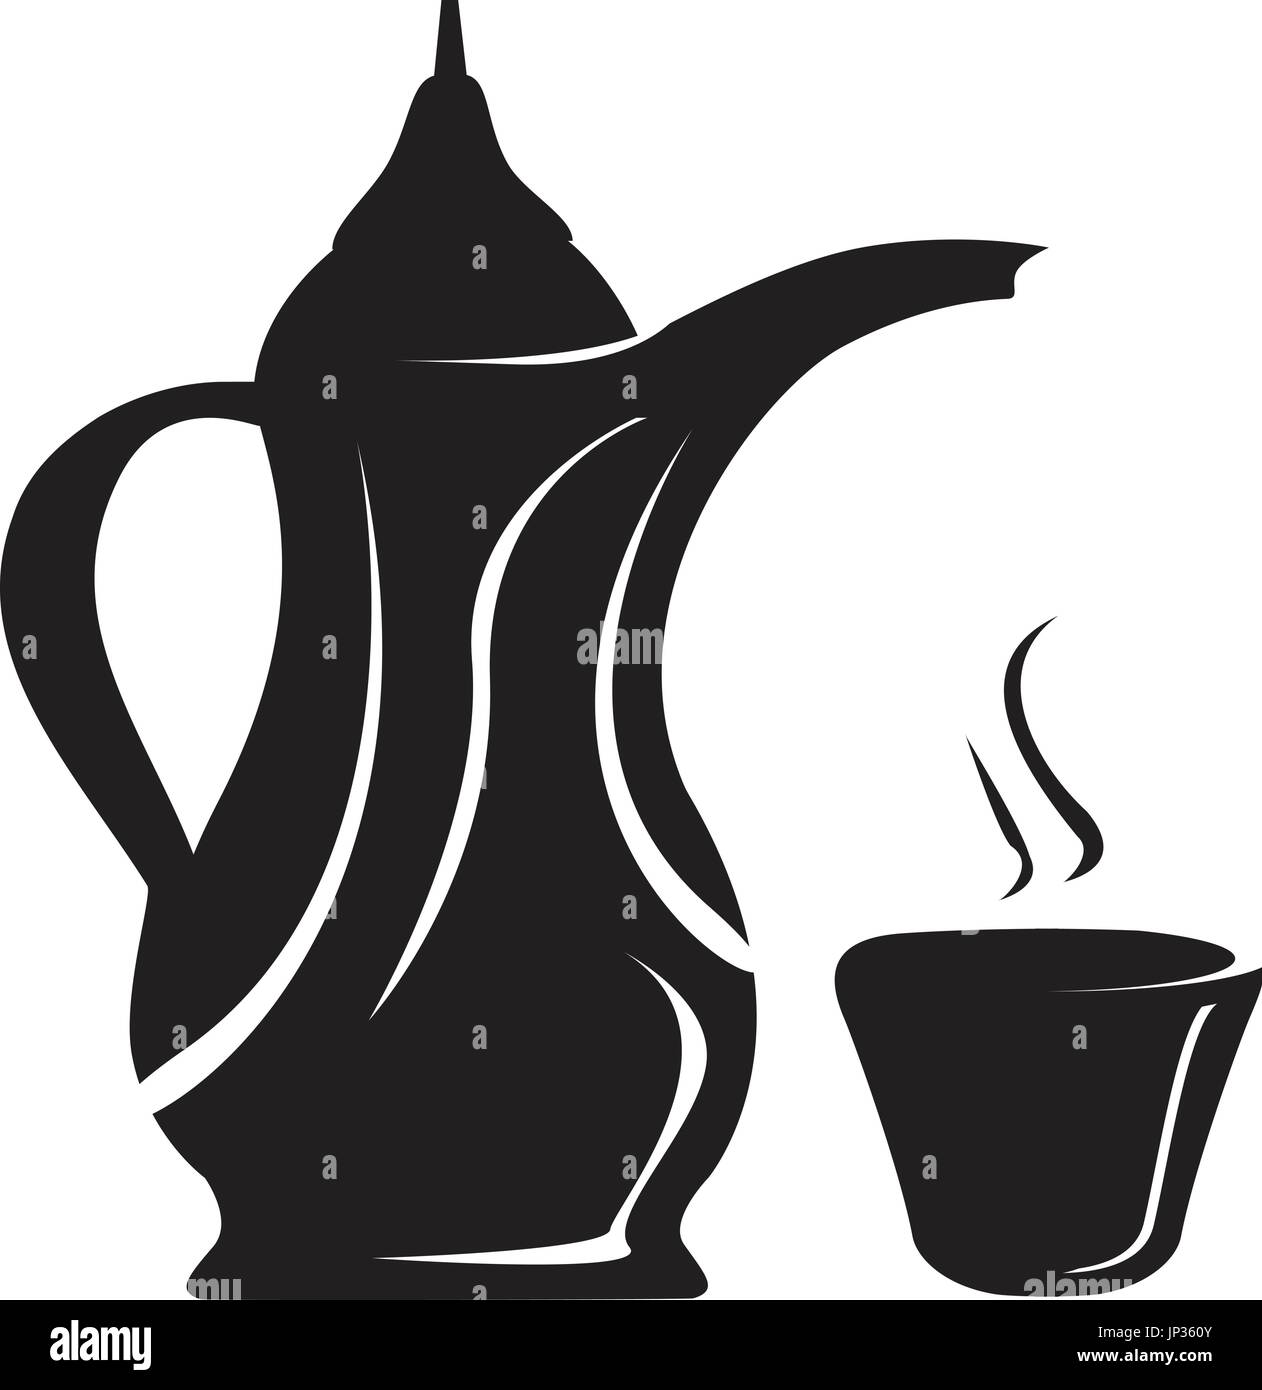 https://c8.alamy.com/comp/JP360Y/elegant-silhouette-icon-for-arabian-coffee-pot-with-cup-JP360Y.jpg